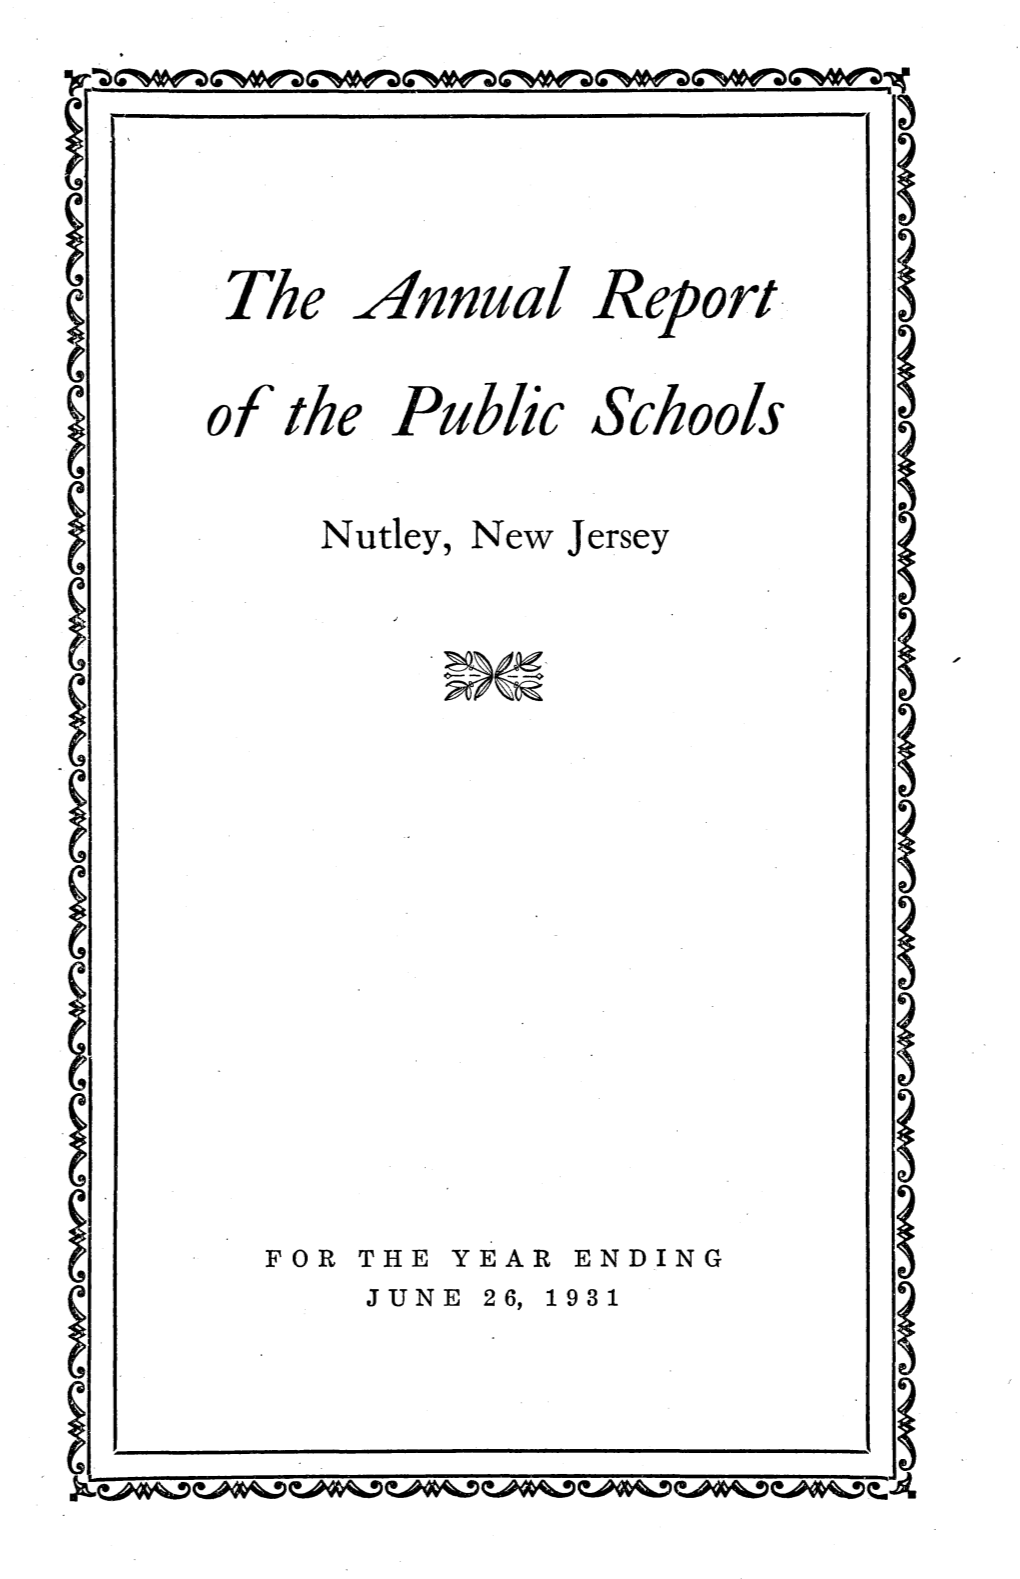 1931 Annual Report of the Public Schools, Nutley NJ